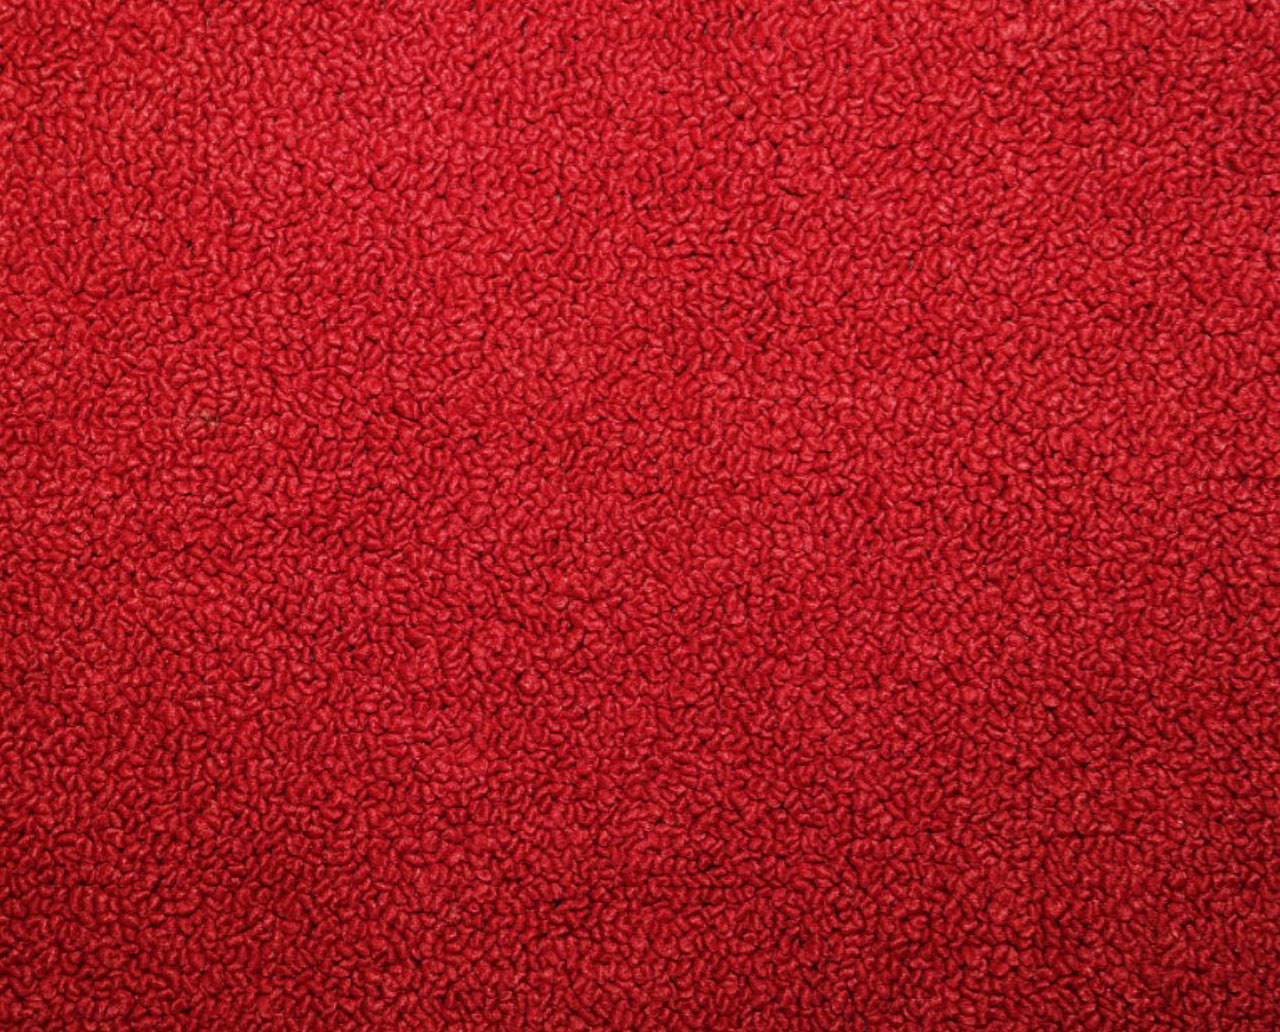 Holden Torana LC Torana S Sedan 42F Calypso Red Carpet (Image 1 of 1)